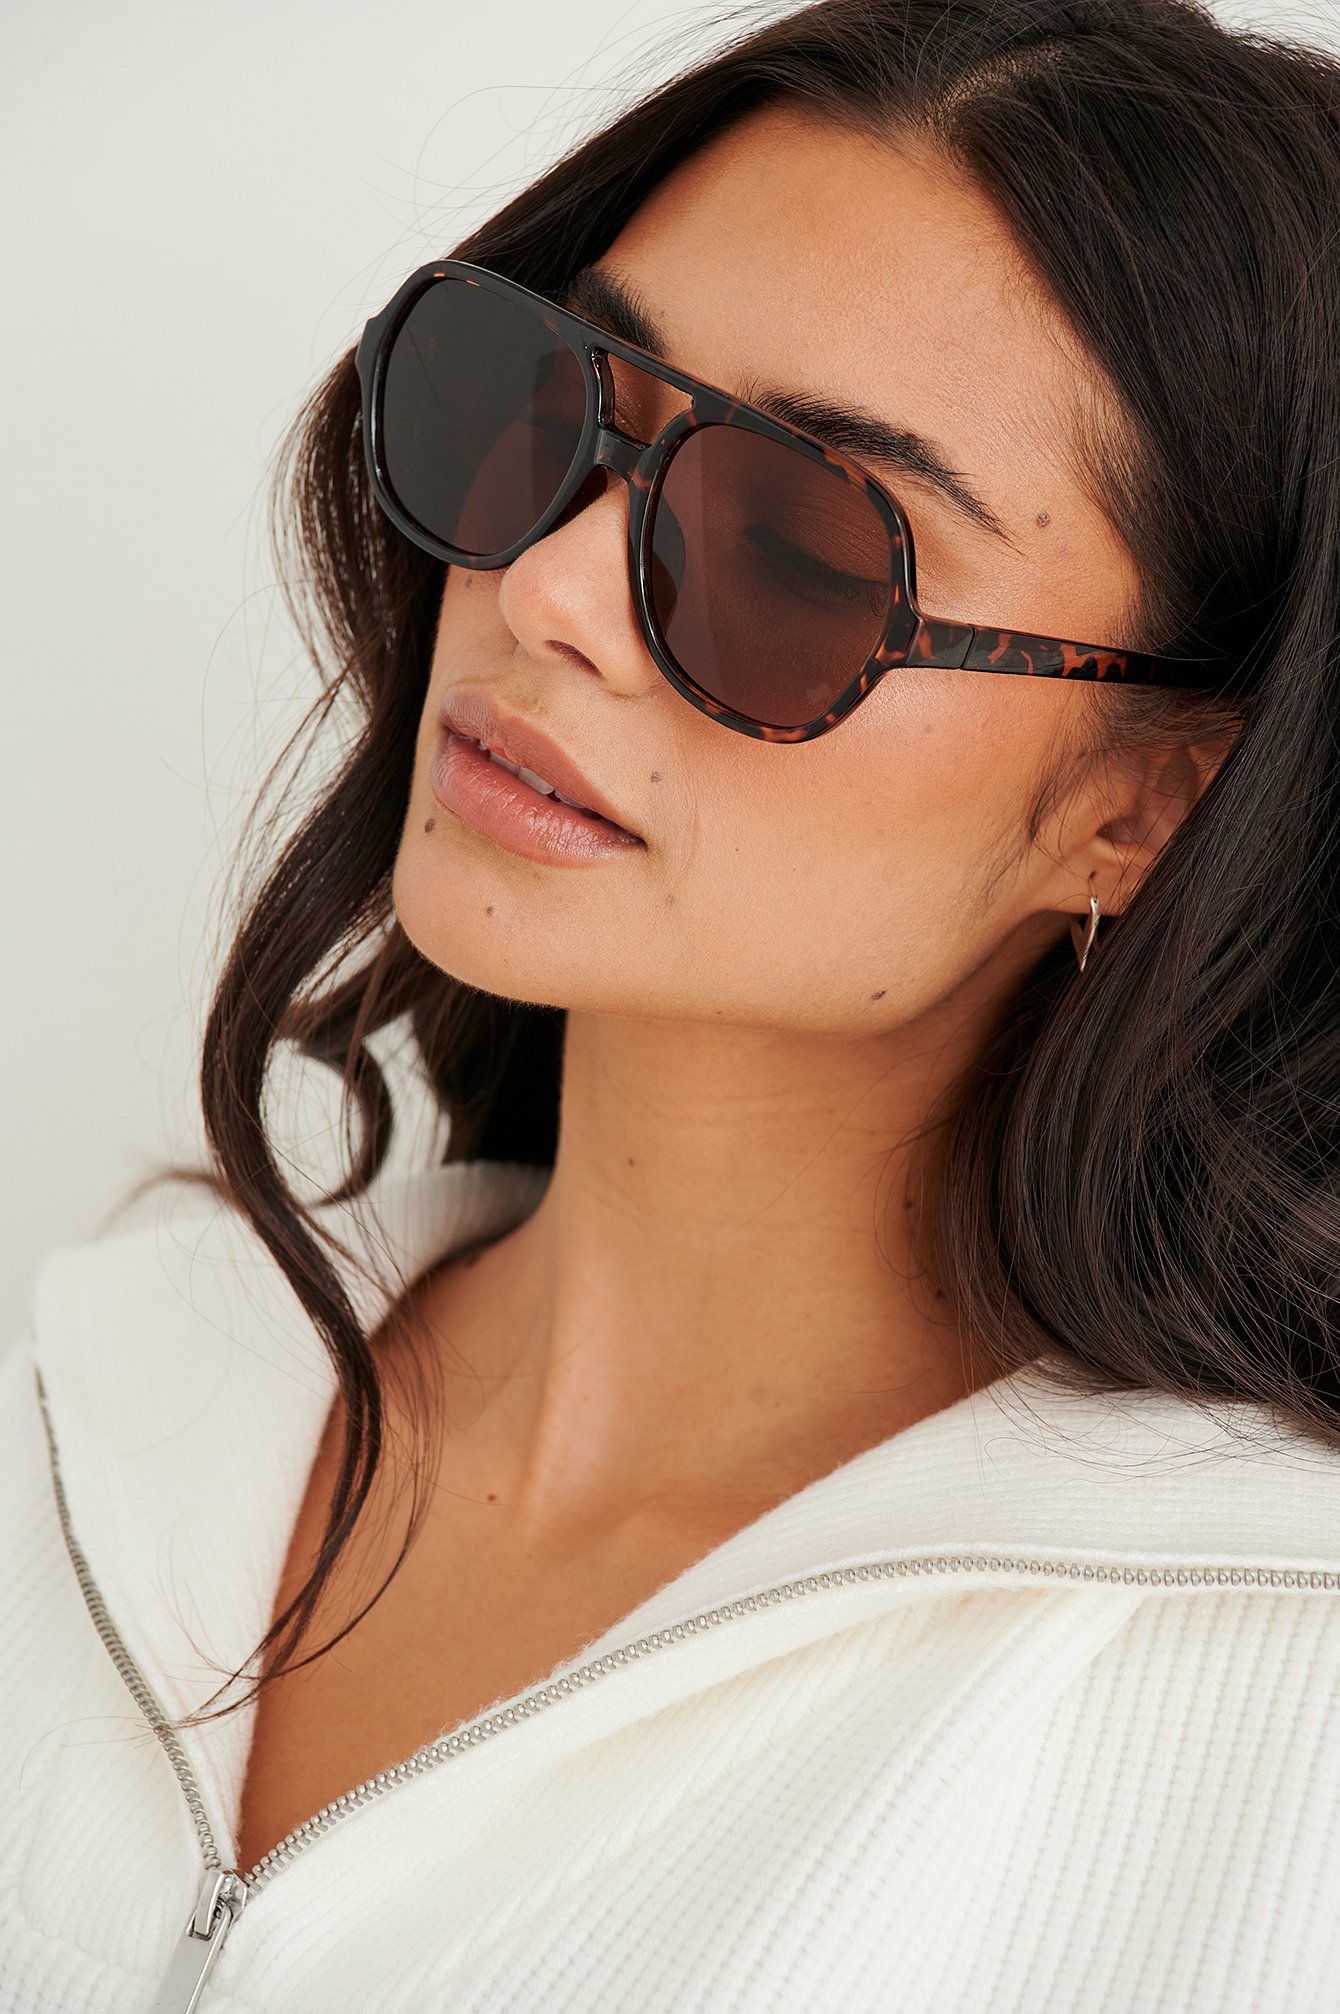 Buy Style Eva Classic Eyewear Sunglasses Men Women Black Retro Pilot Shades  Glasses- Blue at Amazon.in